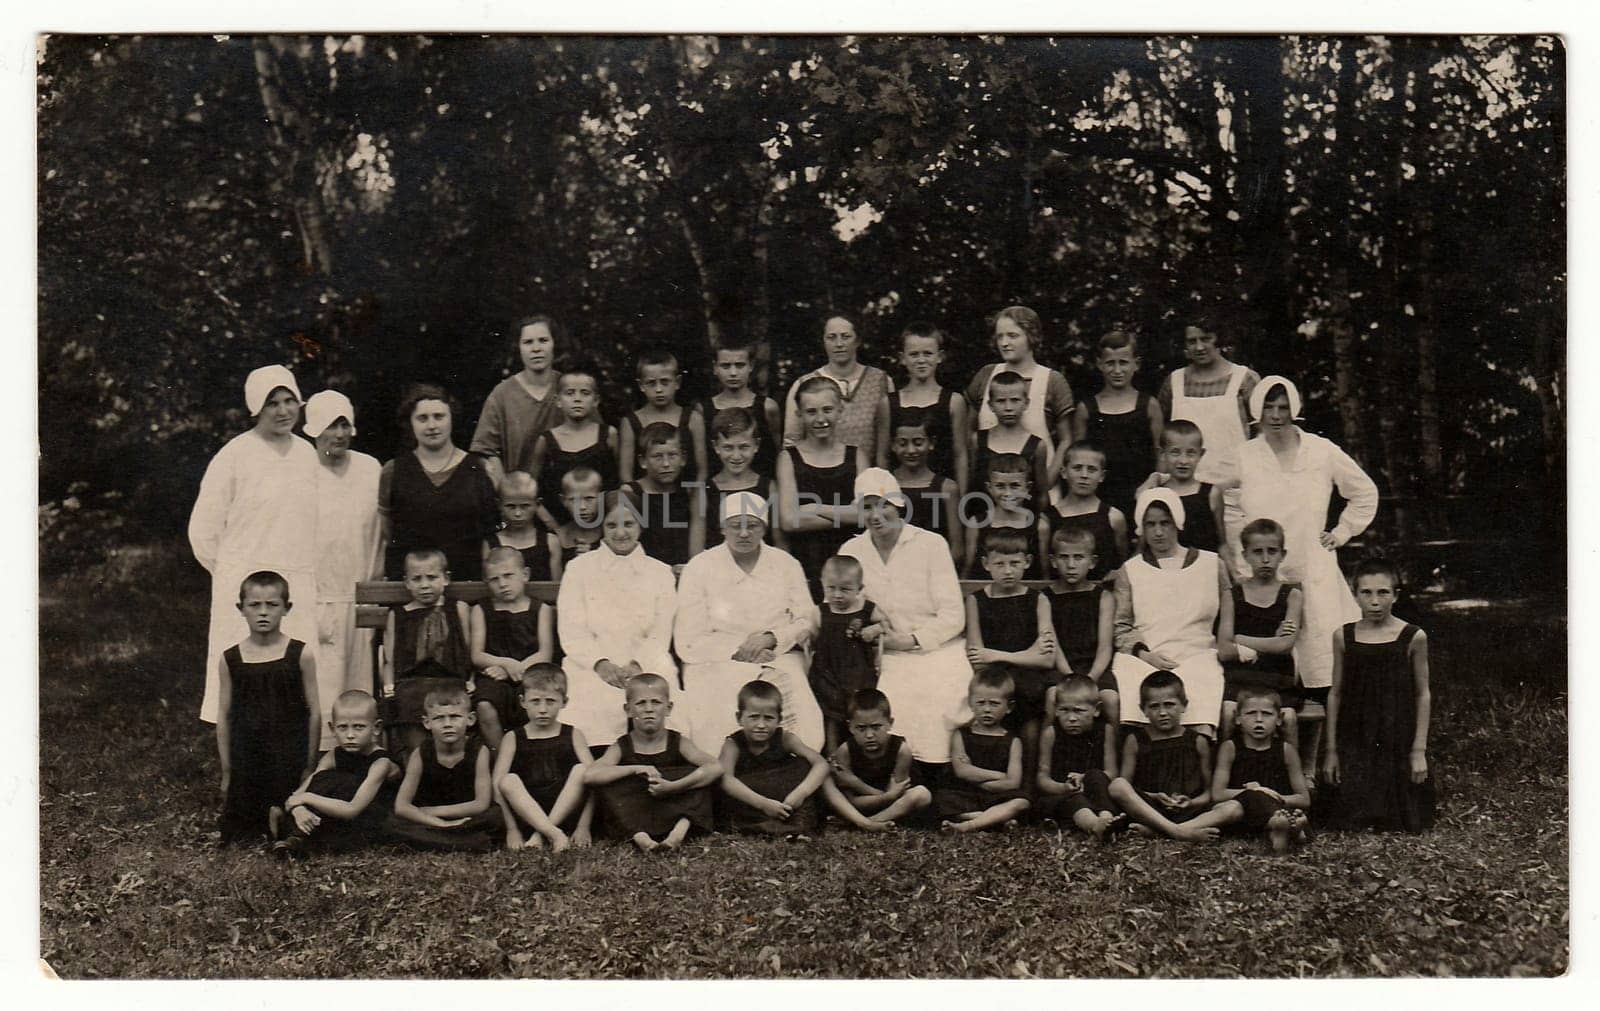 THE CZECHOSLOVAK REPUBLIC, CIRCA 1940s: Vintage photo shows a group of boys and nurses in nature. Photo was taken in sanatorium, circa 1940s.